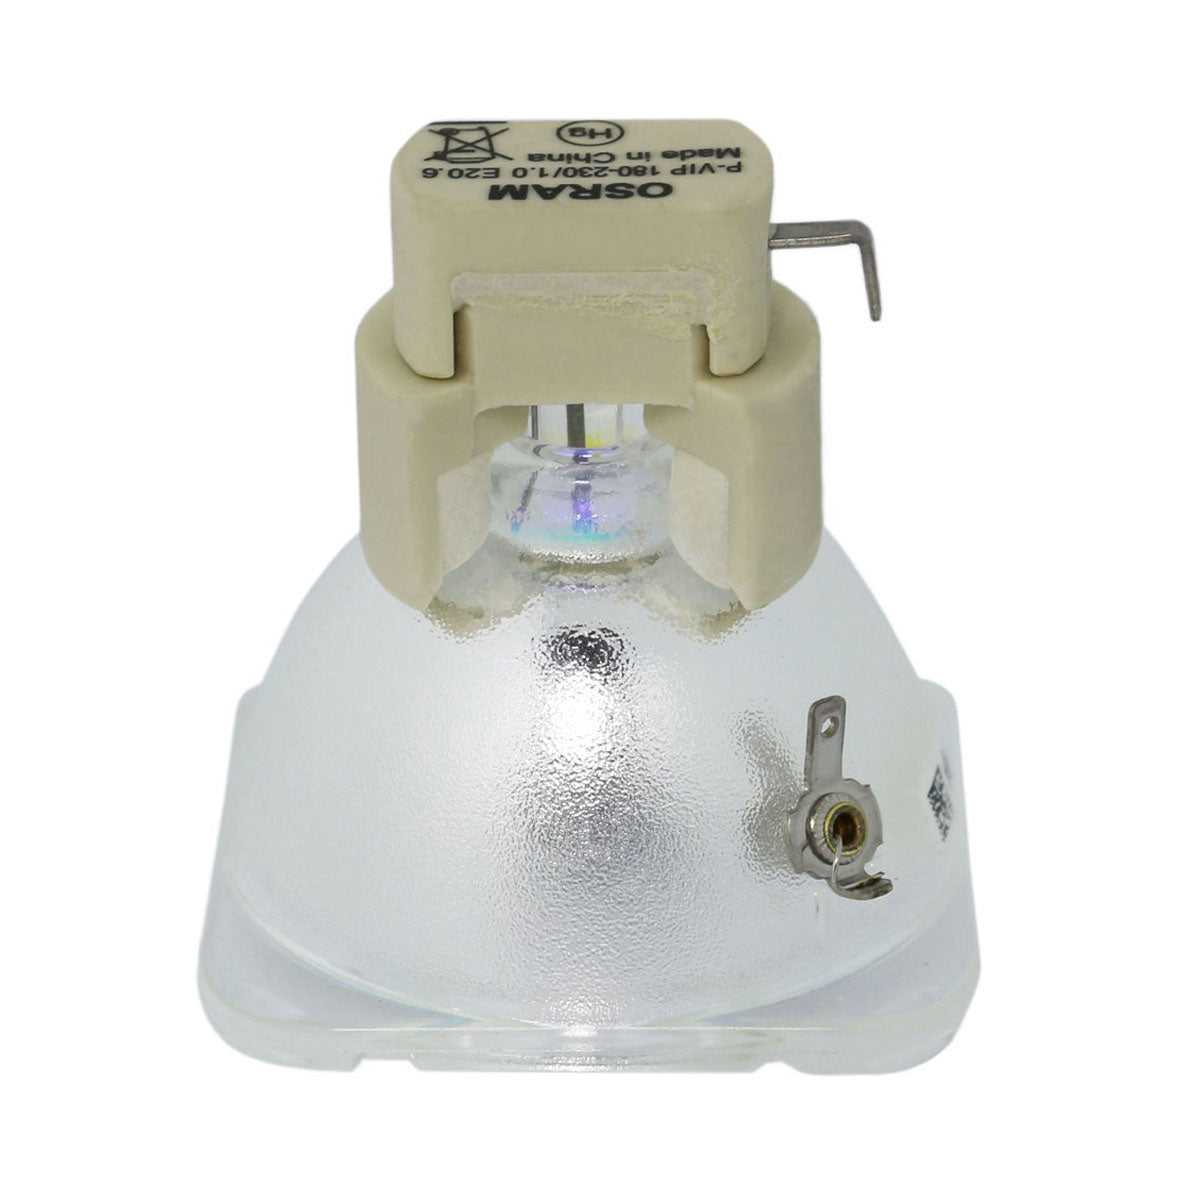 Runco LS3-Lamp Osram Projector Bare Lamp